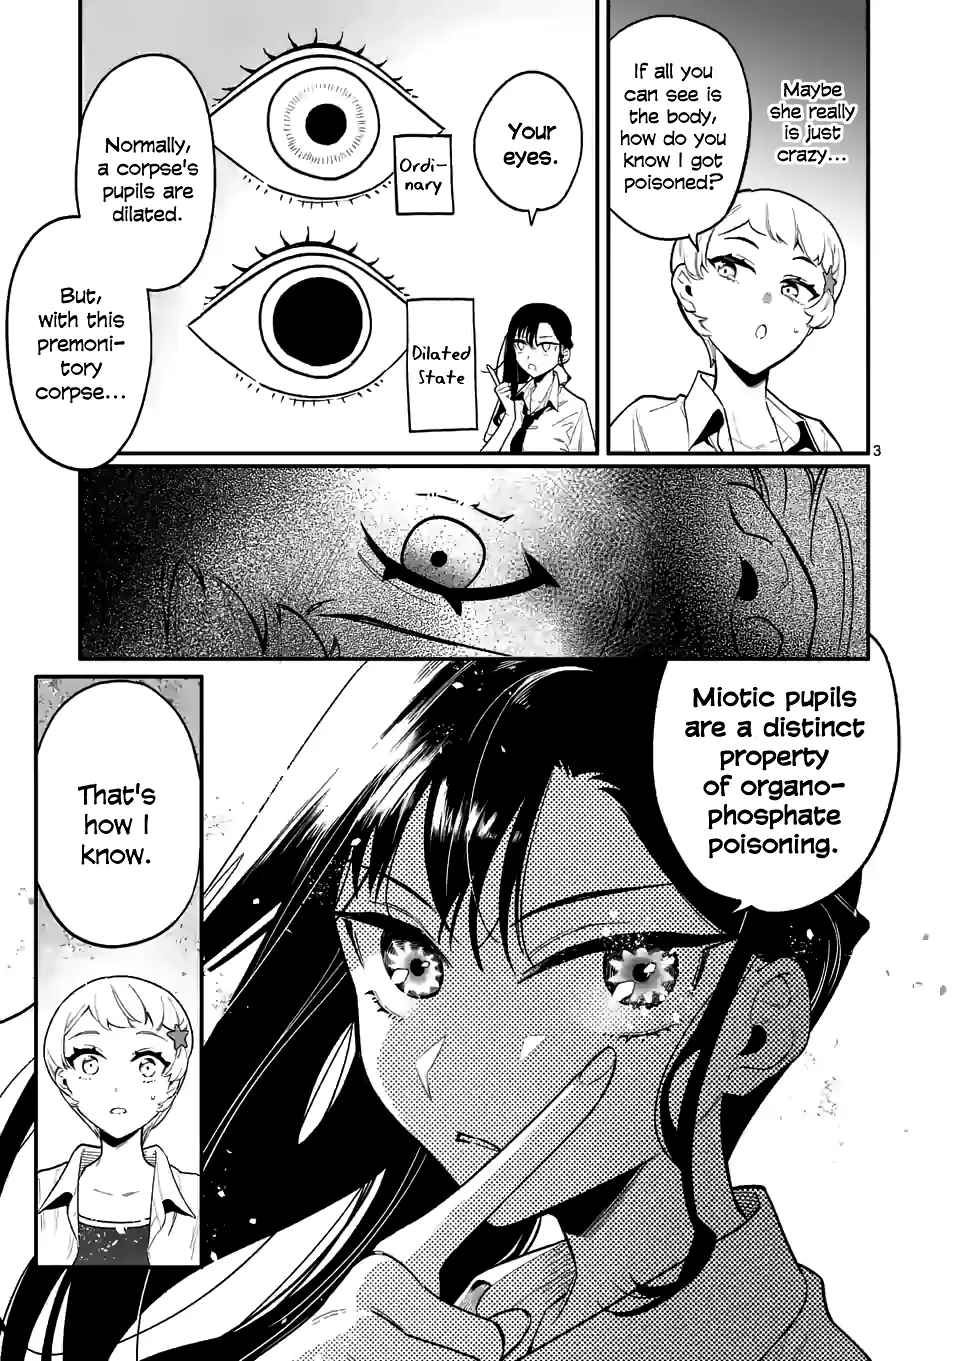 Liar Satsuki Can See Death - 33 page 3